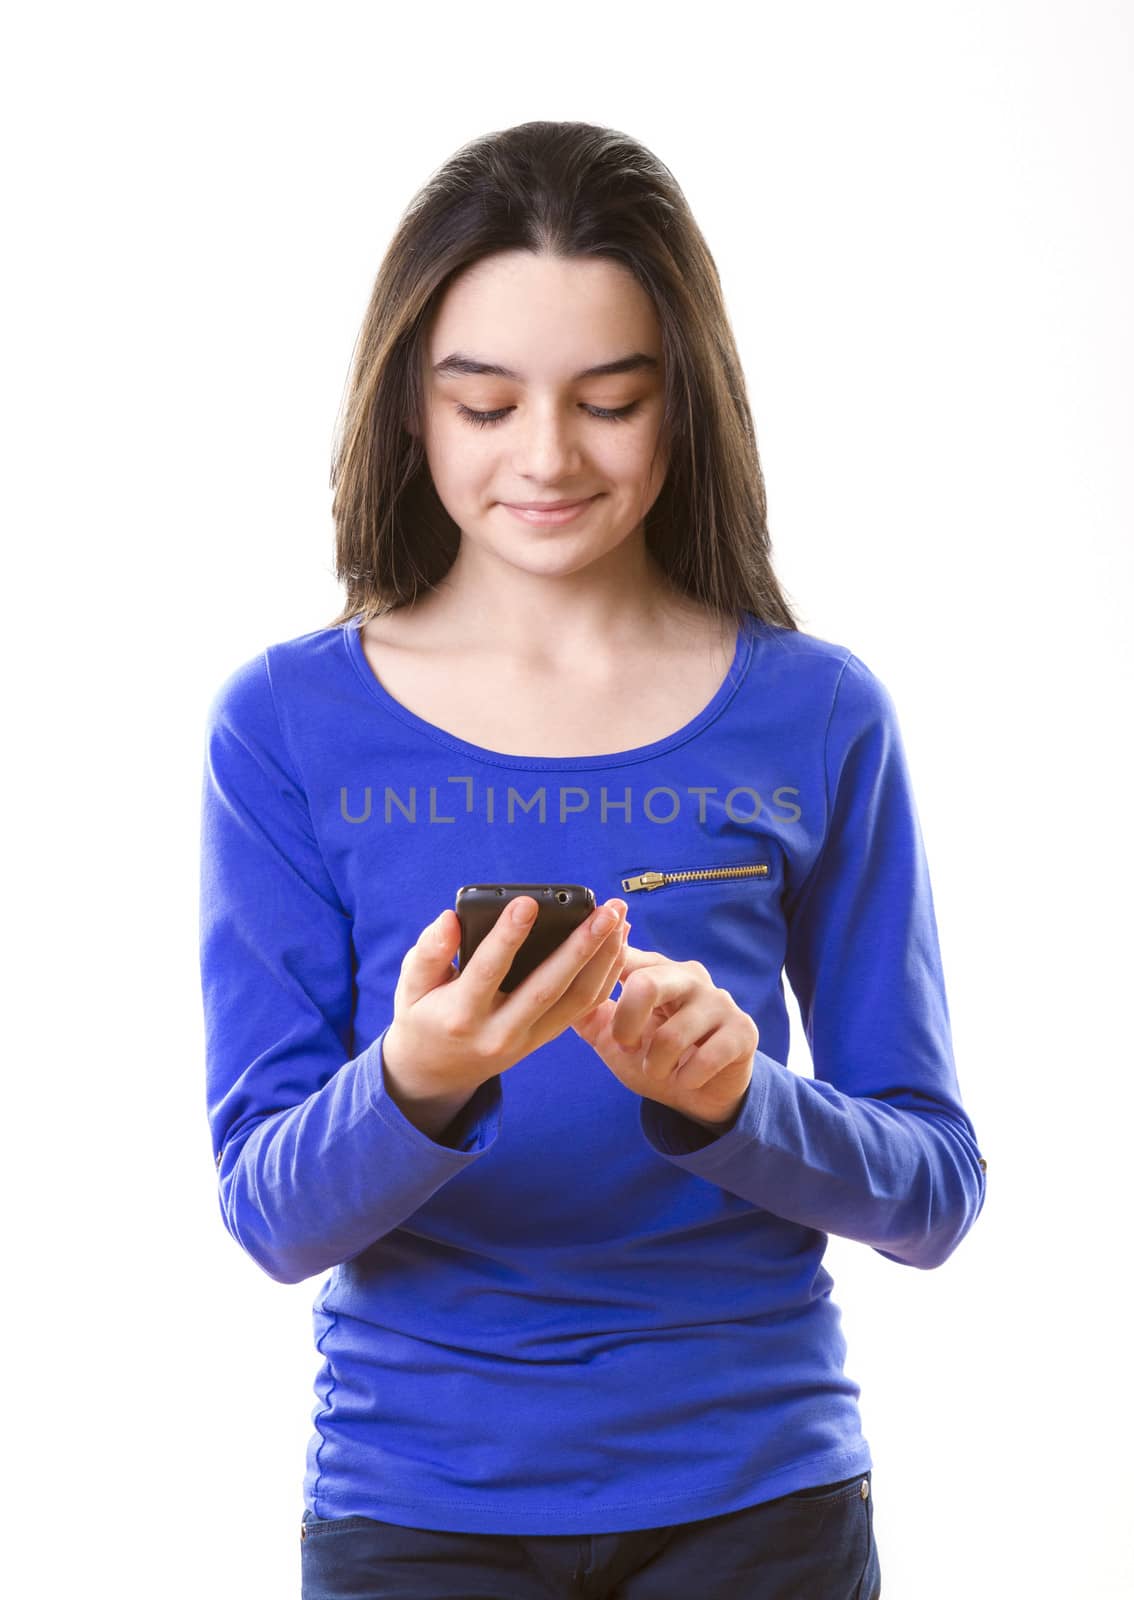 Teenage girl with smartphone by manaemedia